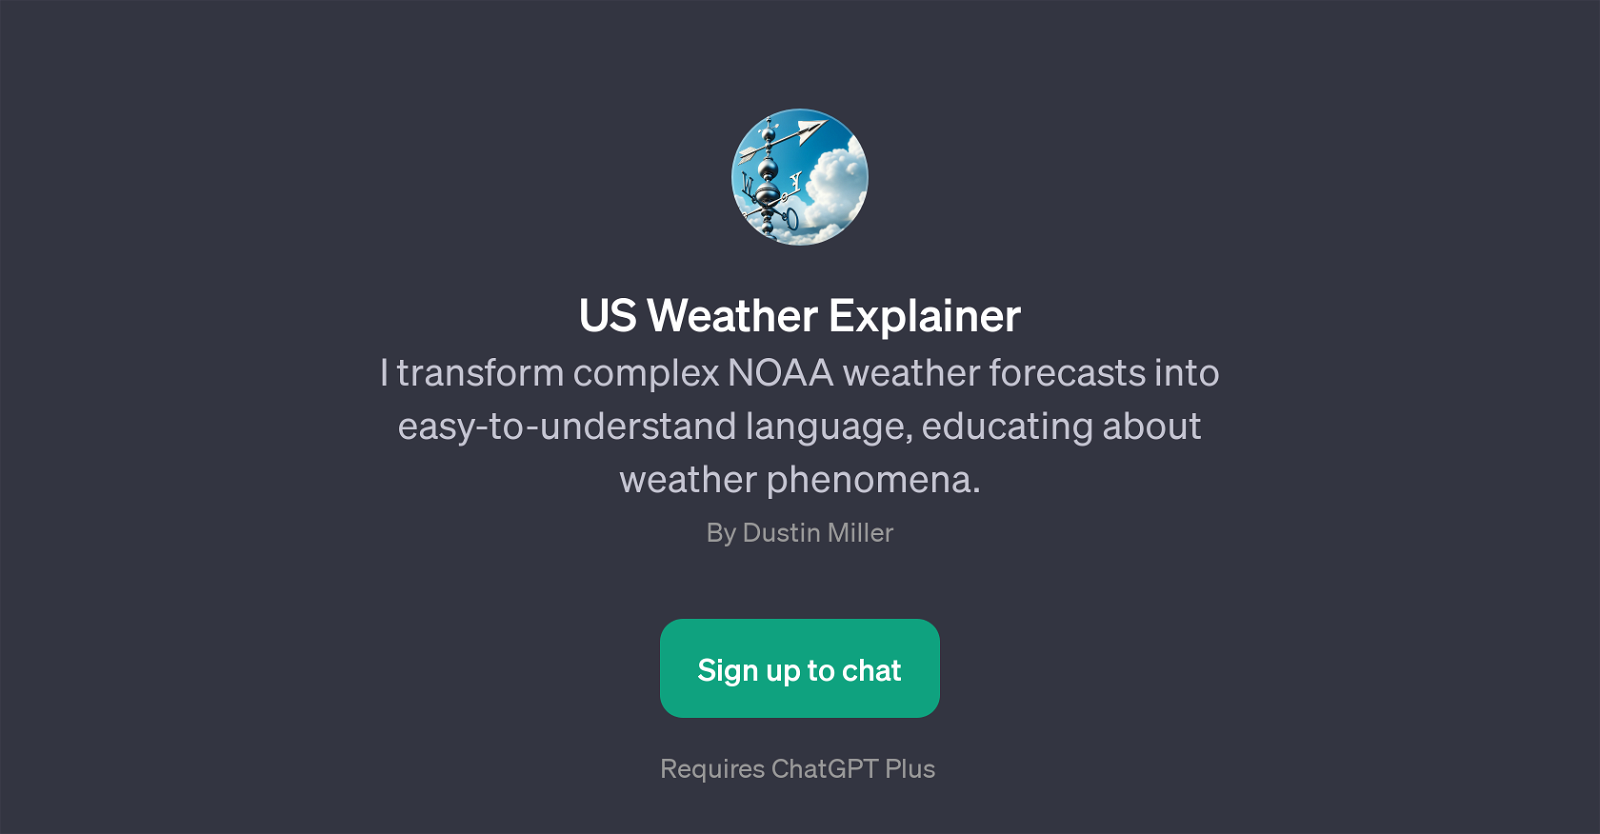 US Weather Explainer website